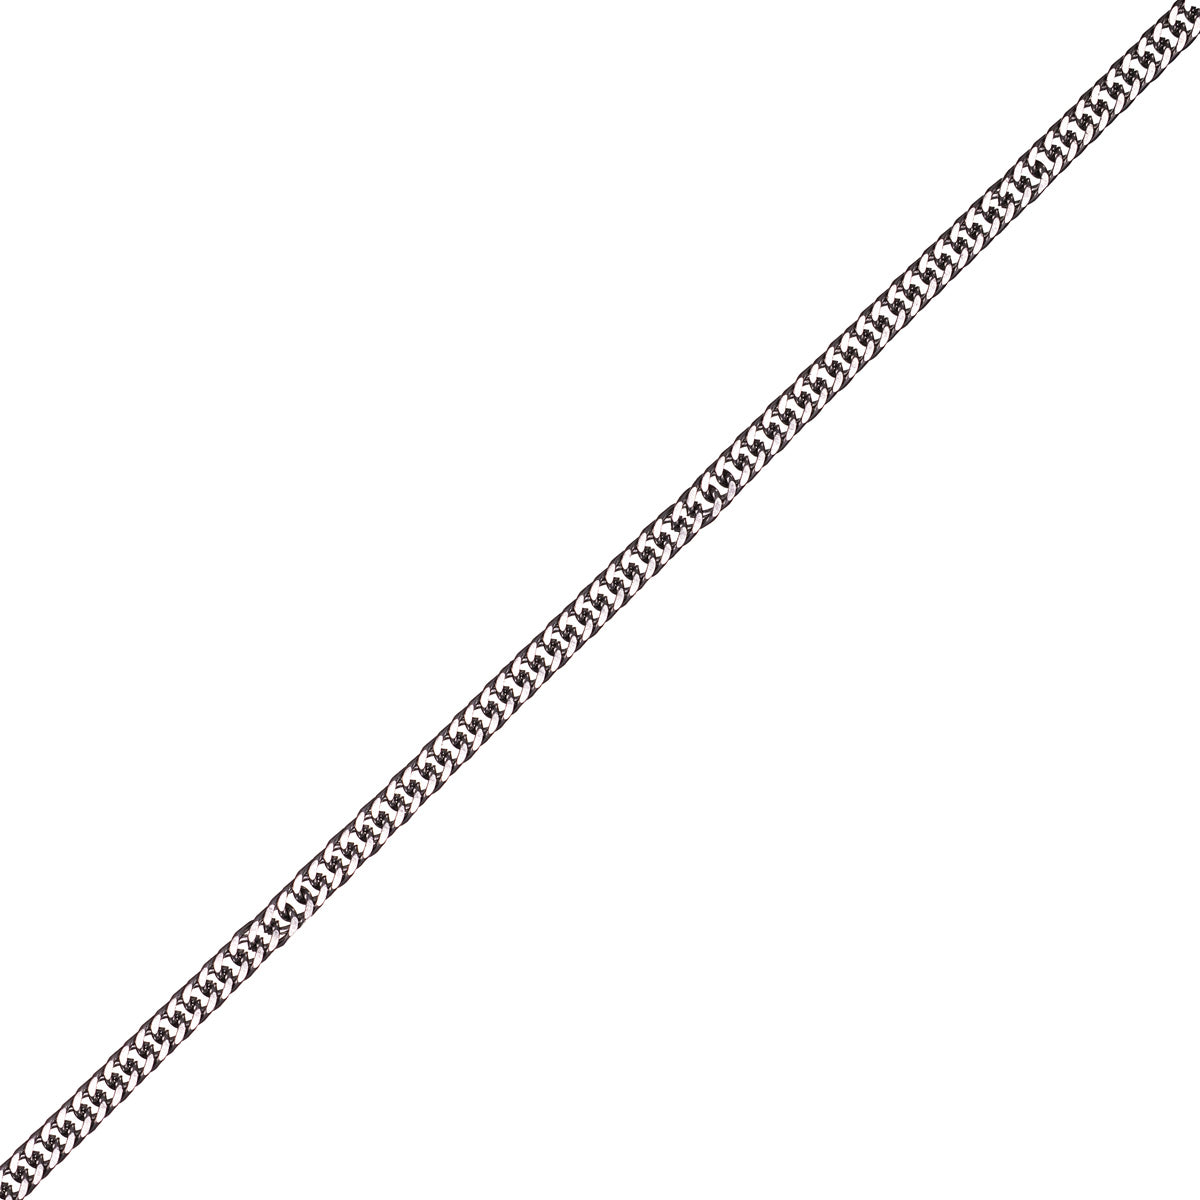 Dense reddish thin armor chain steel necklace 4mm 55cm